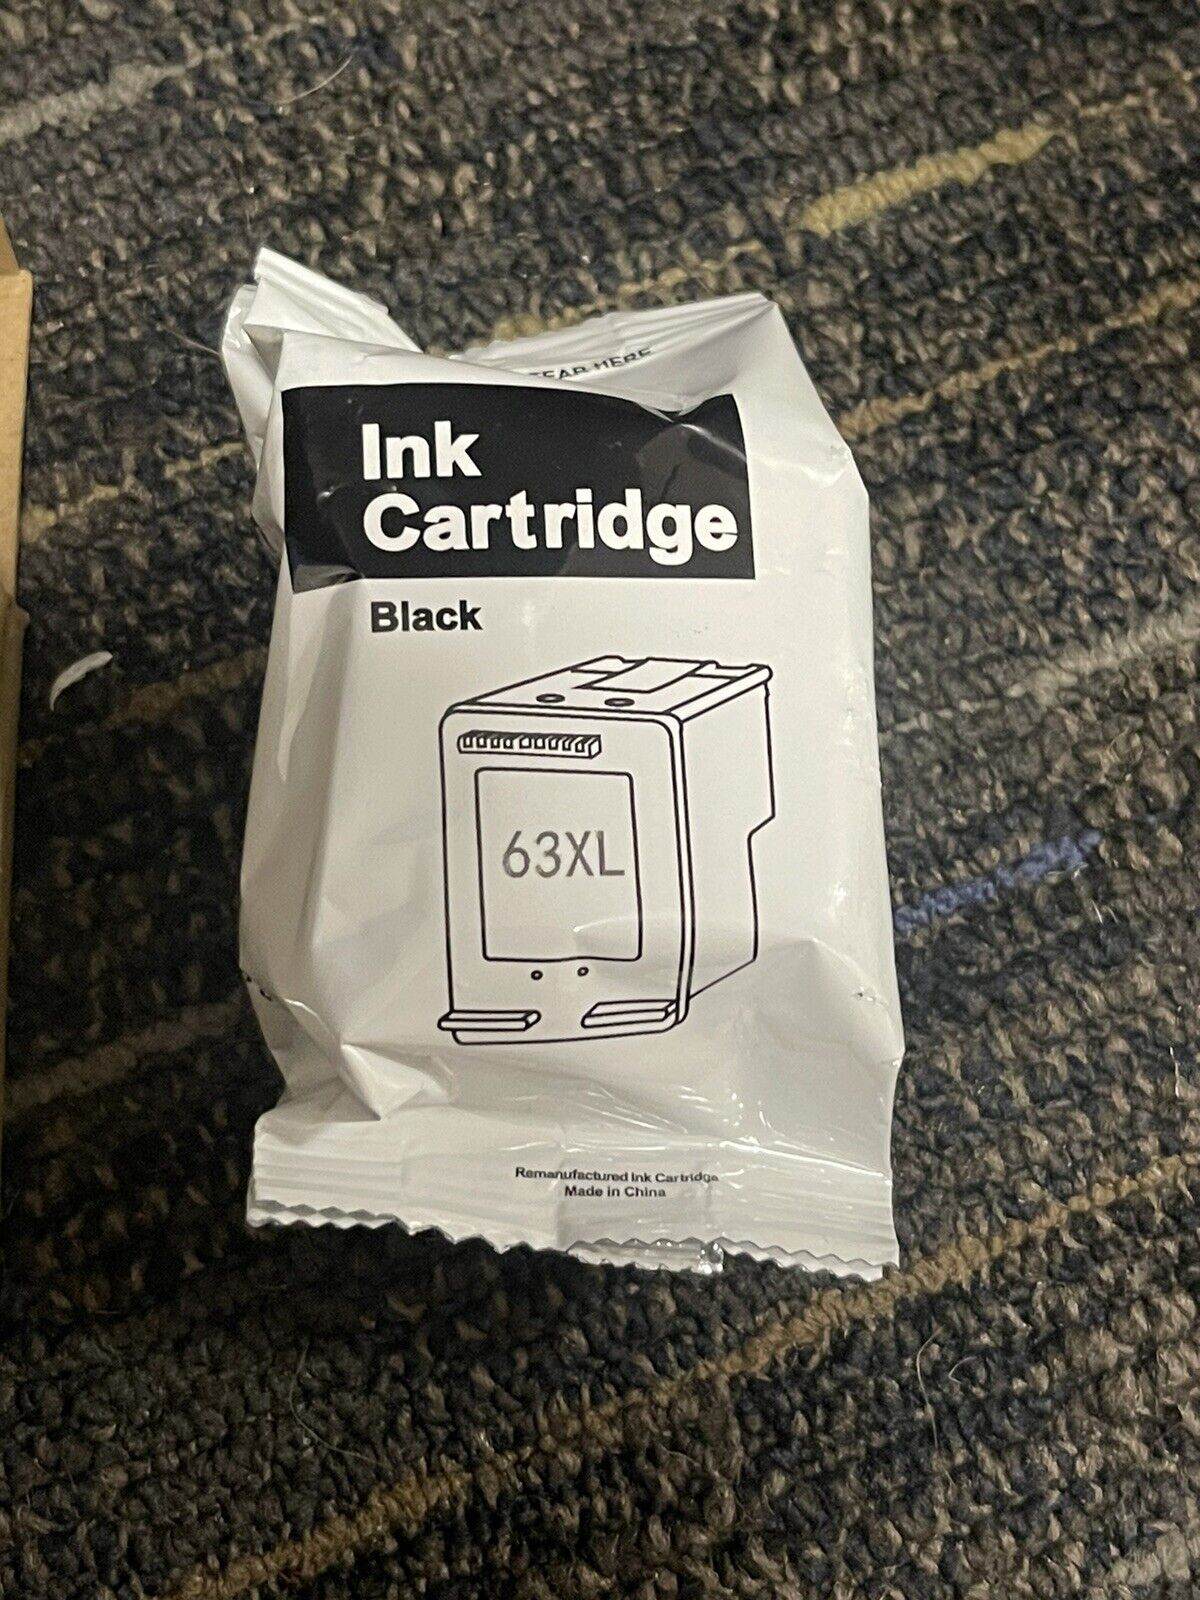 EZ ink cartridge 63XL ONE CARTRIDGE BRAND NEW NEVER OPENED